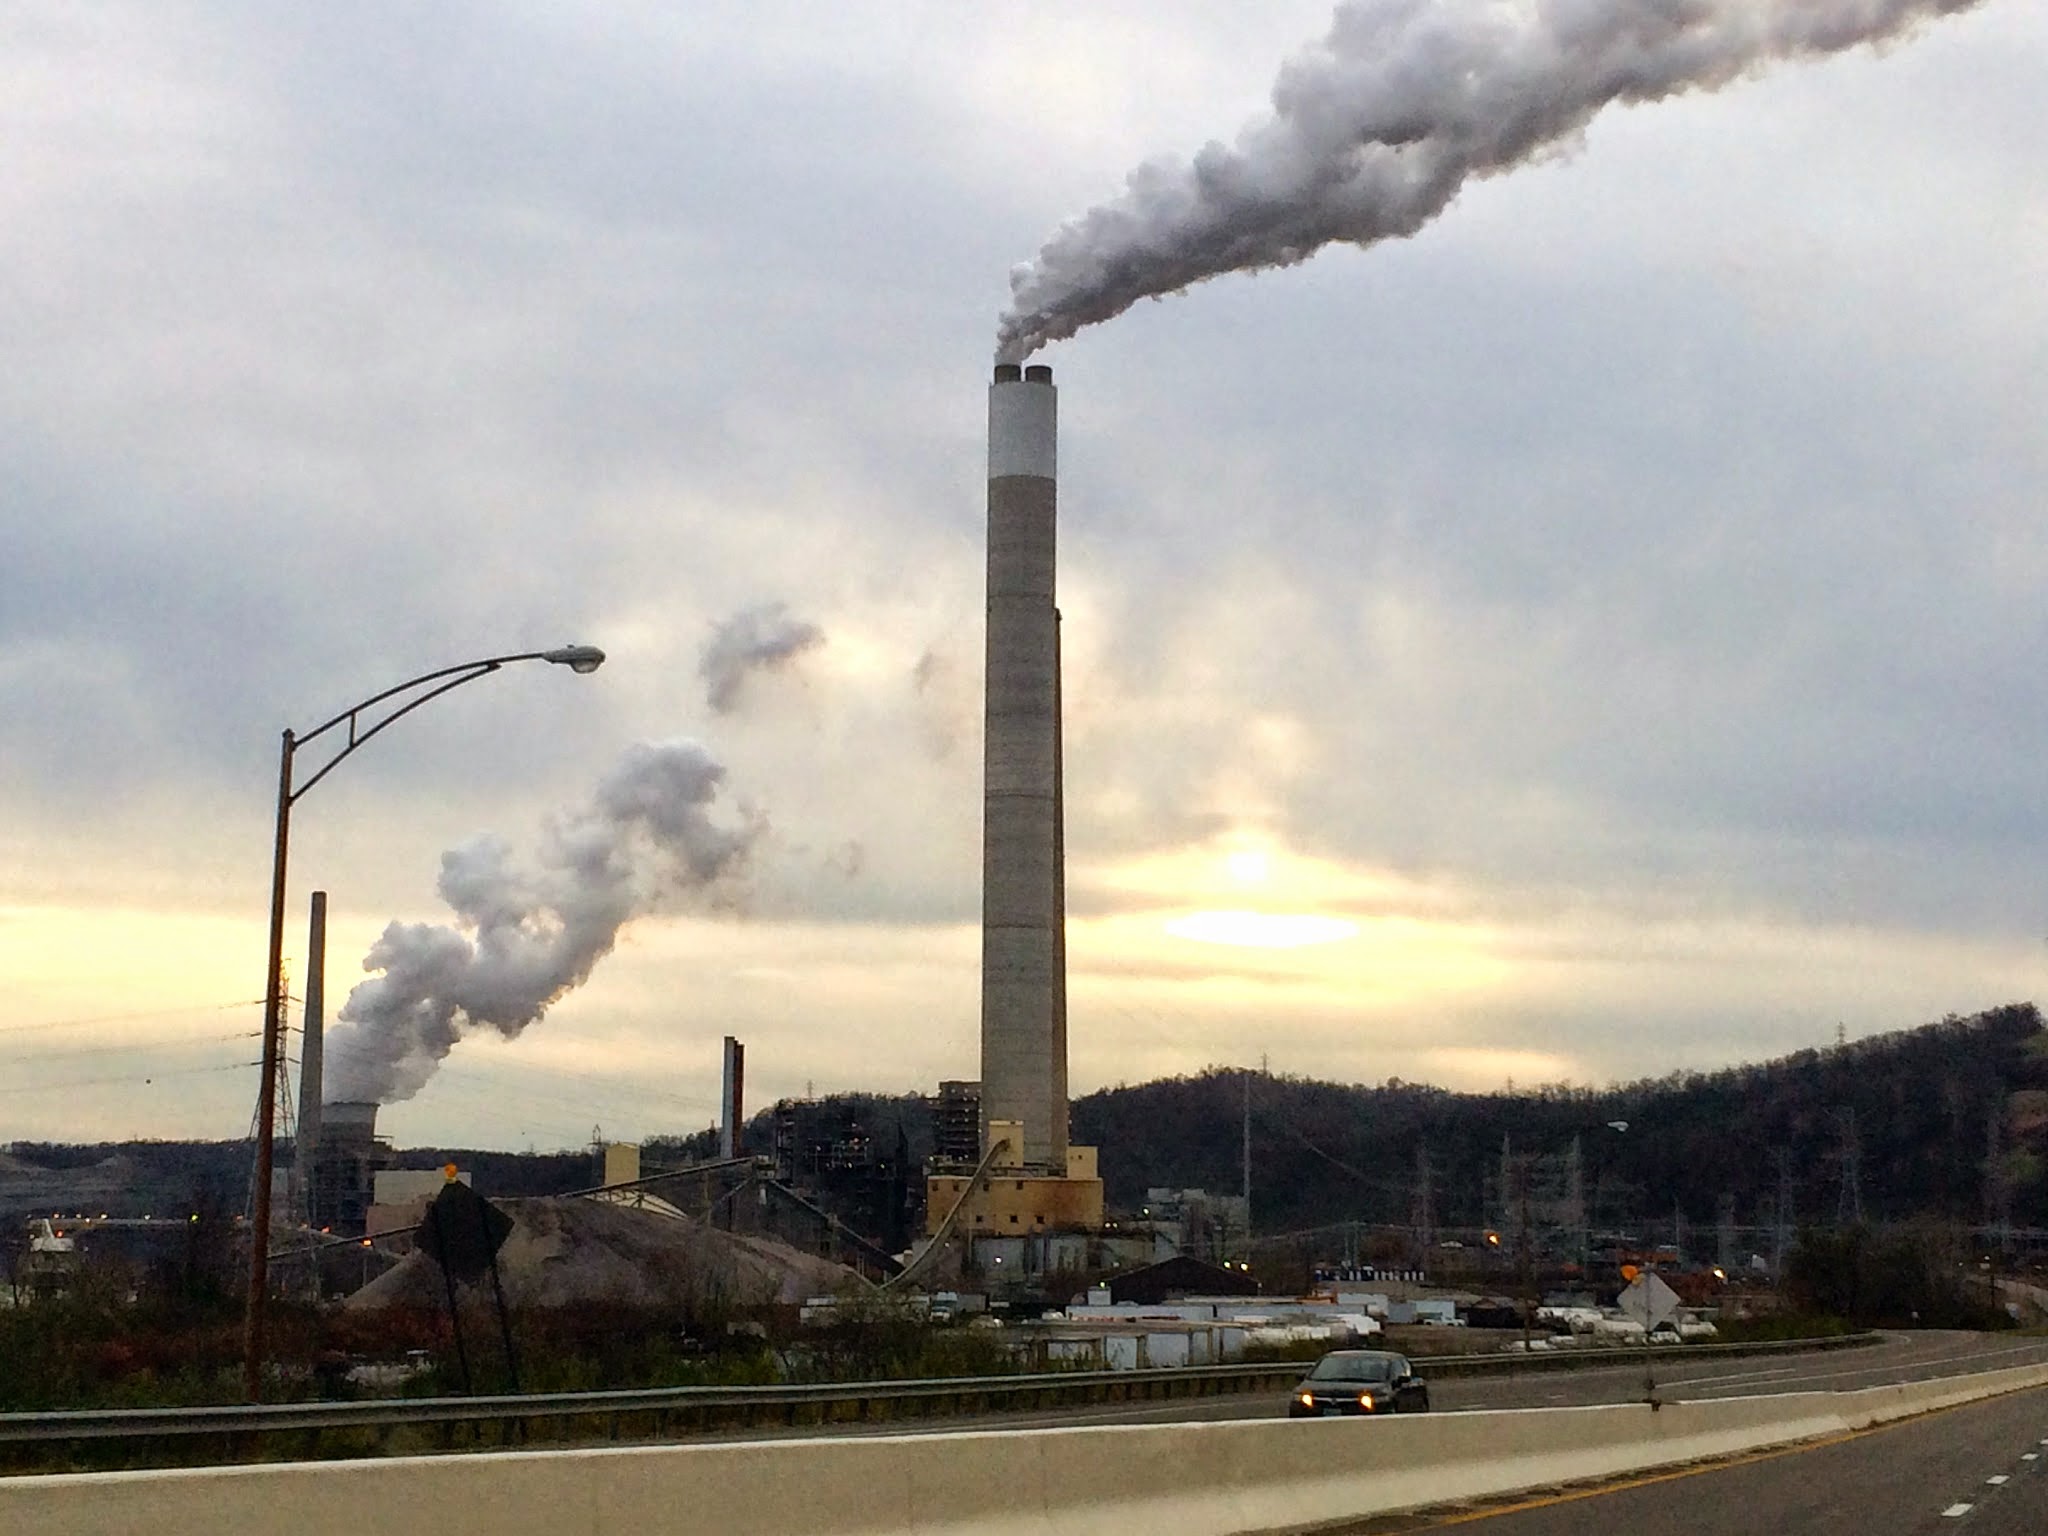 A coal power plant, a major particulate source